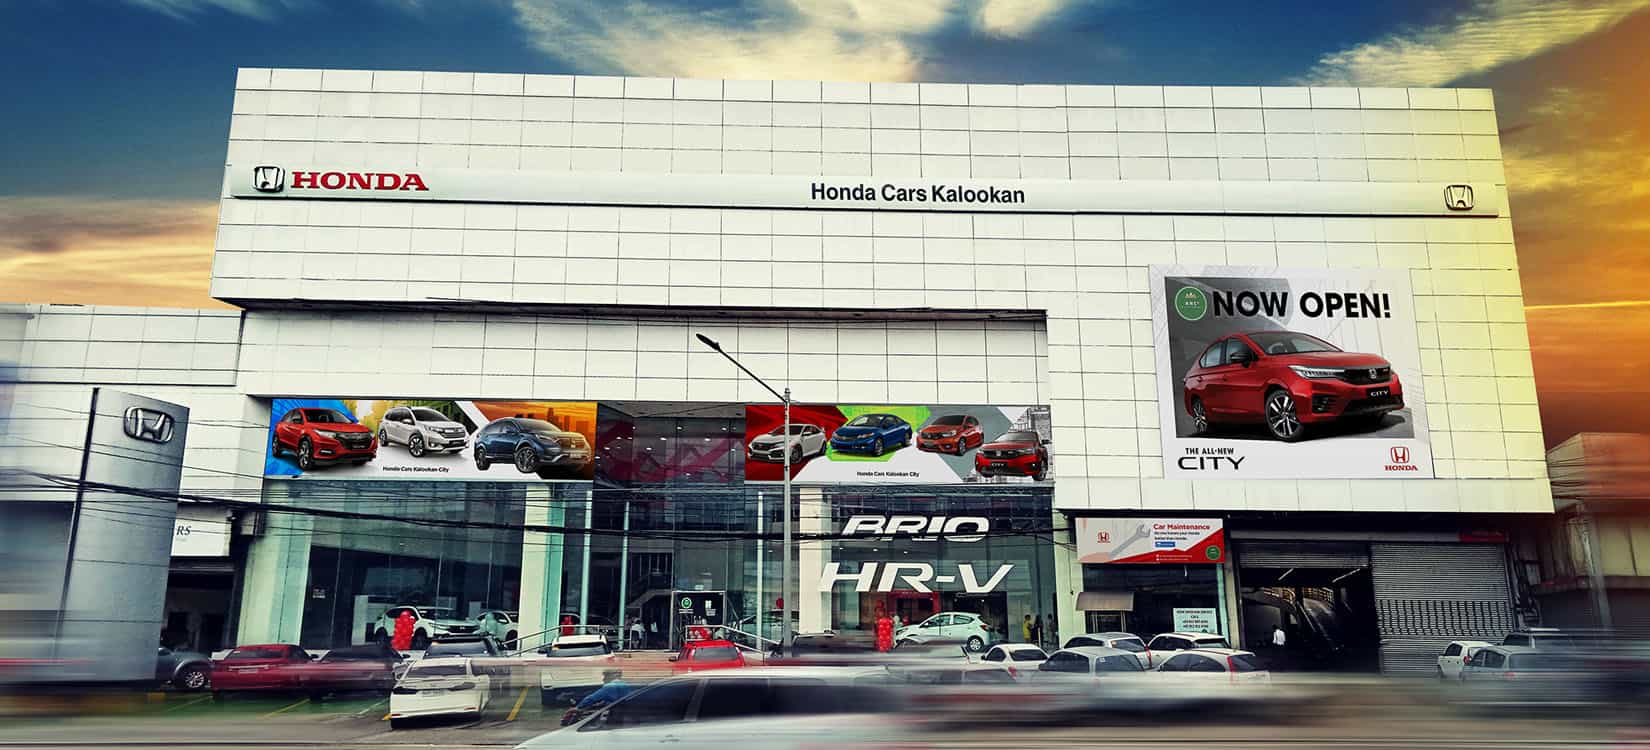 Honda inaugurates 36th dealership in Kalookan City